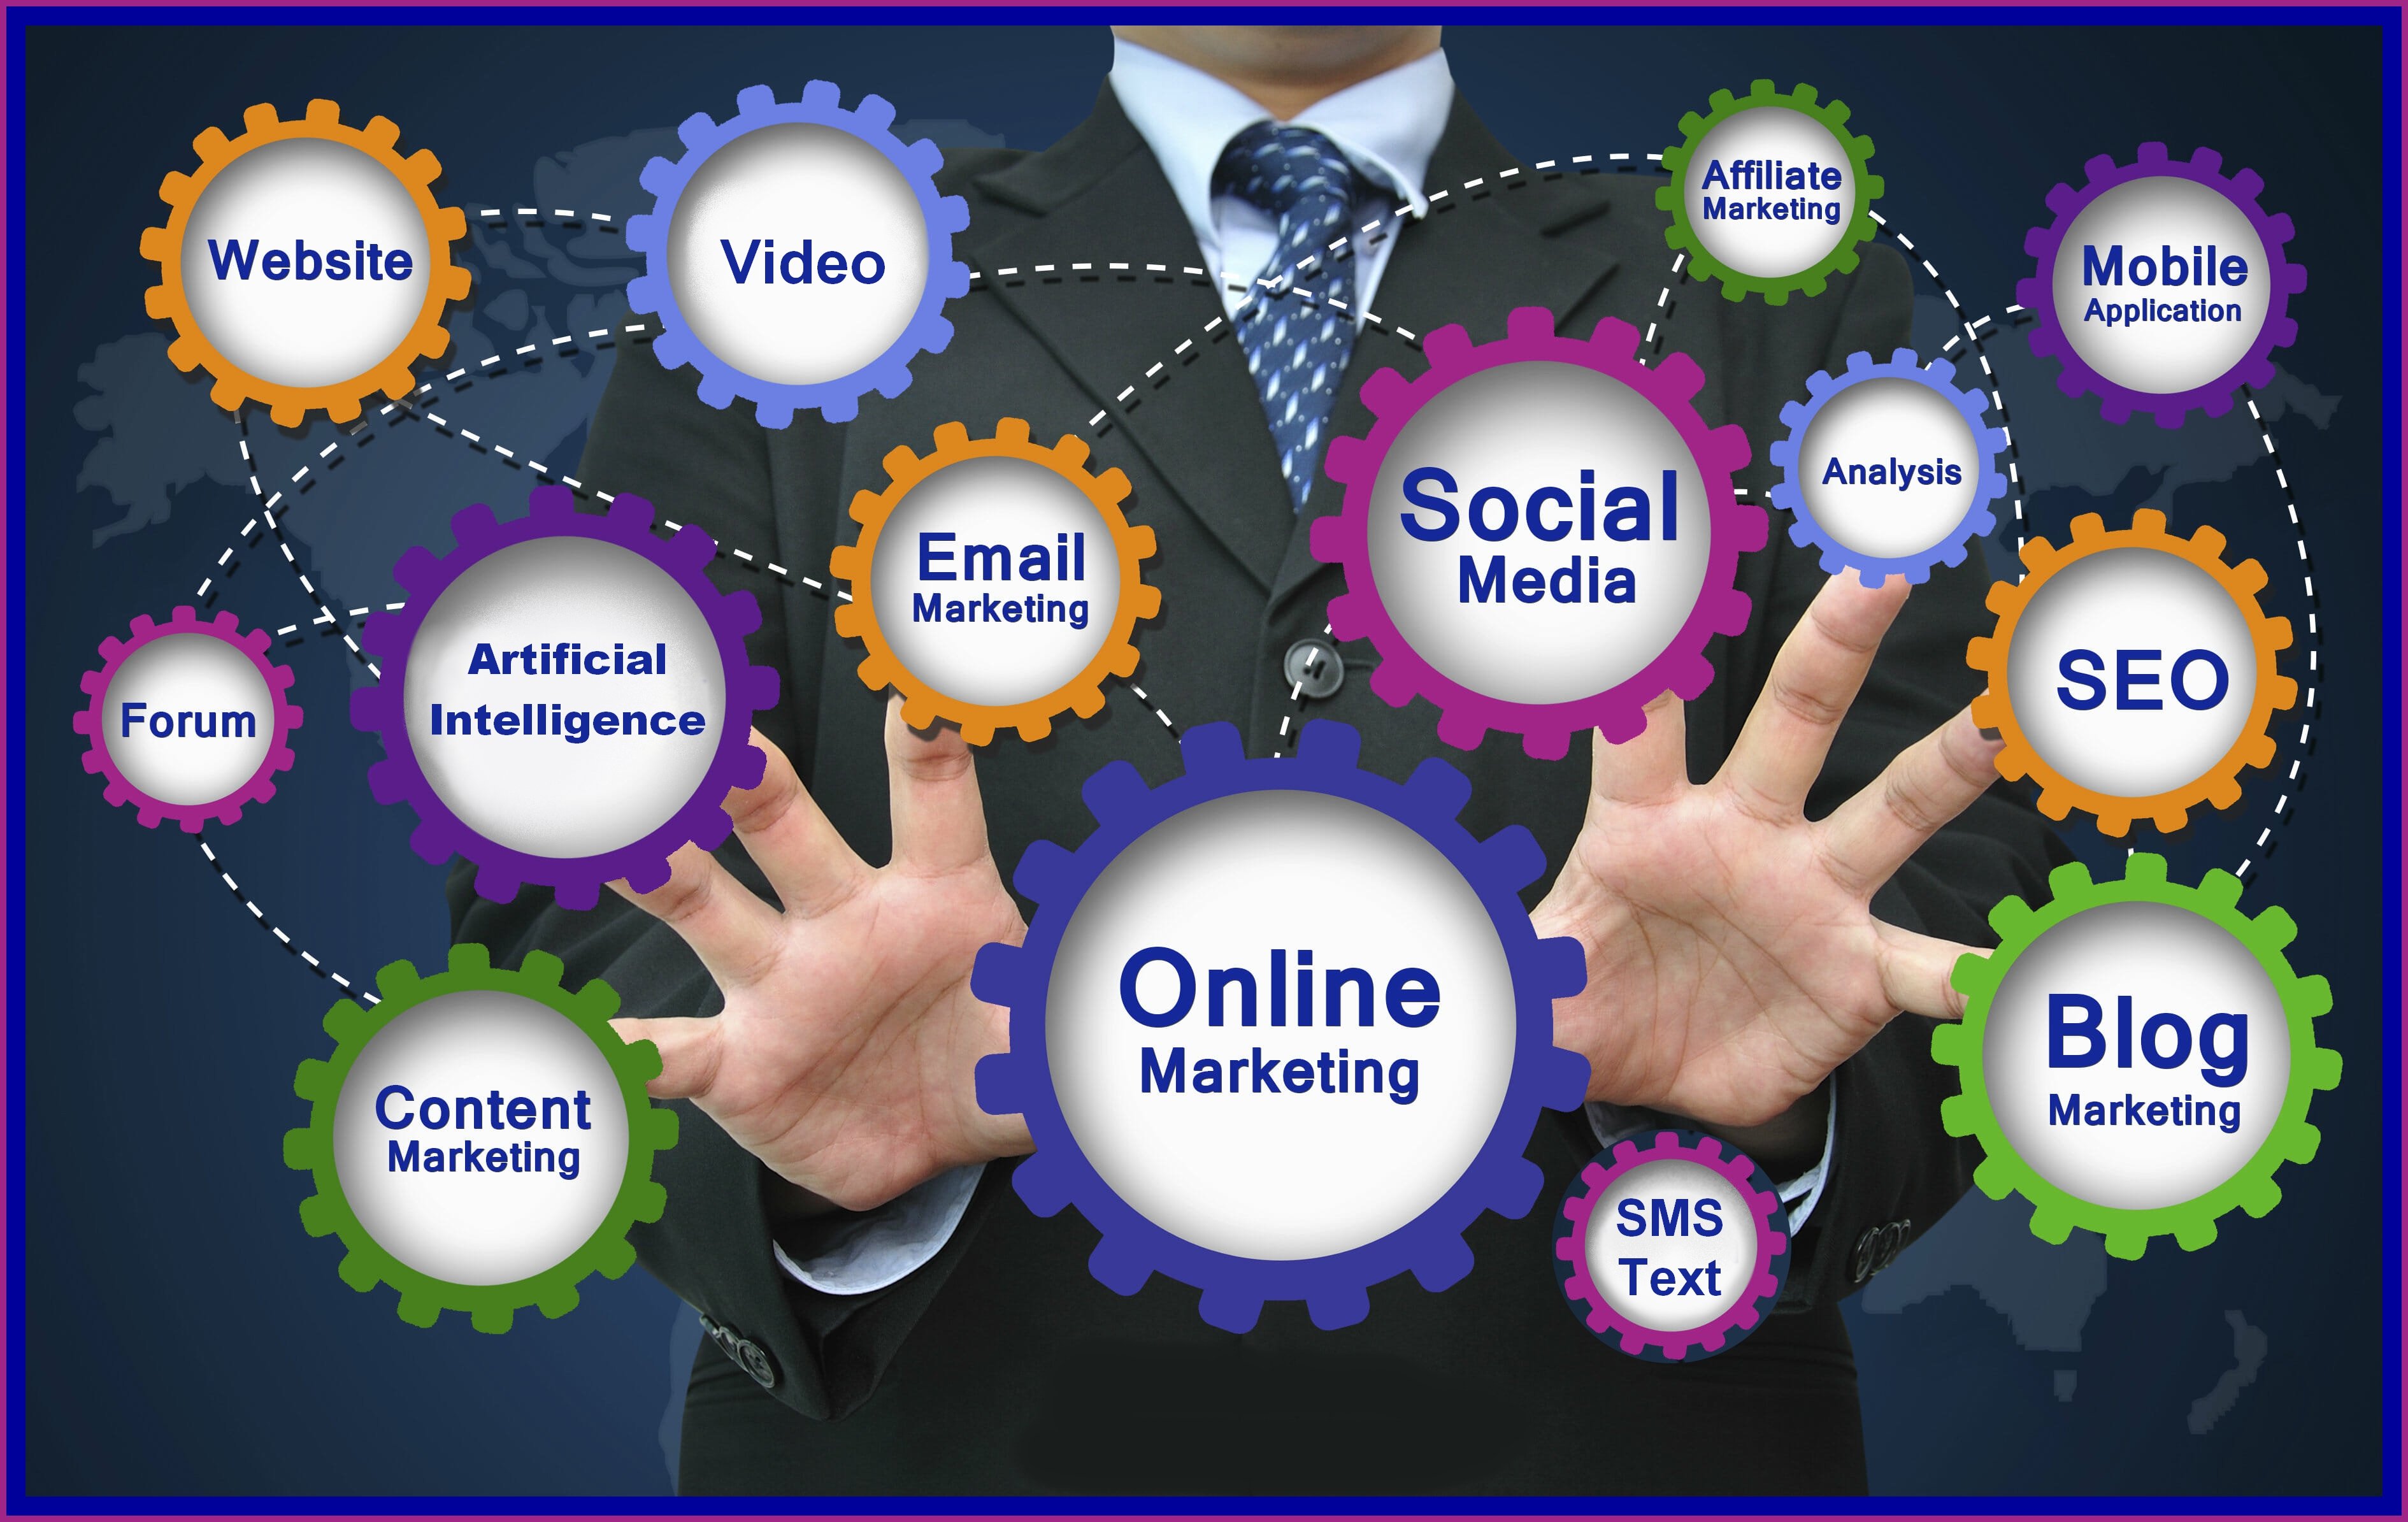 Best Digital Marketing Services